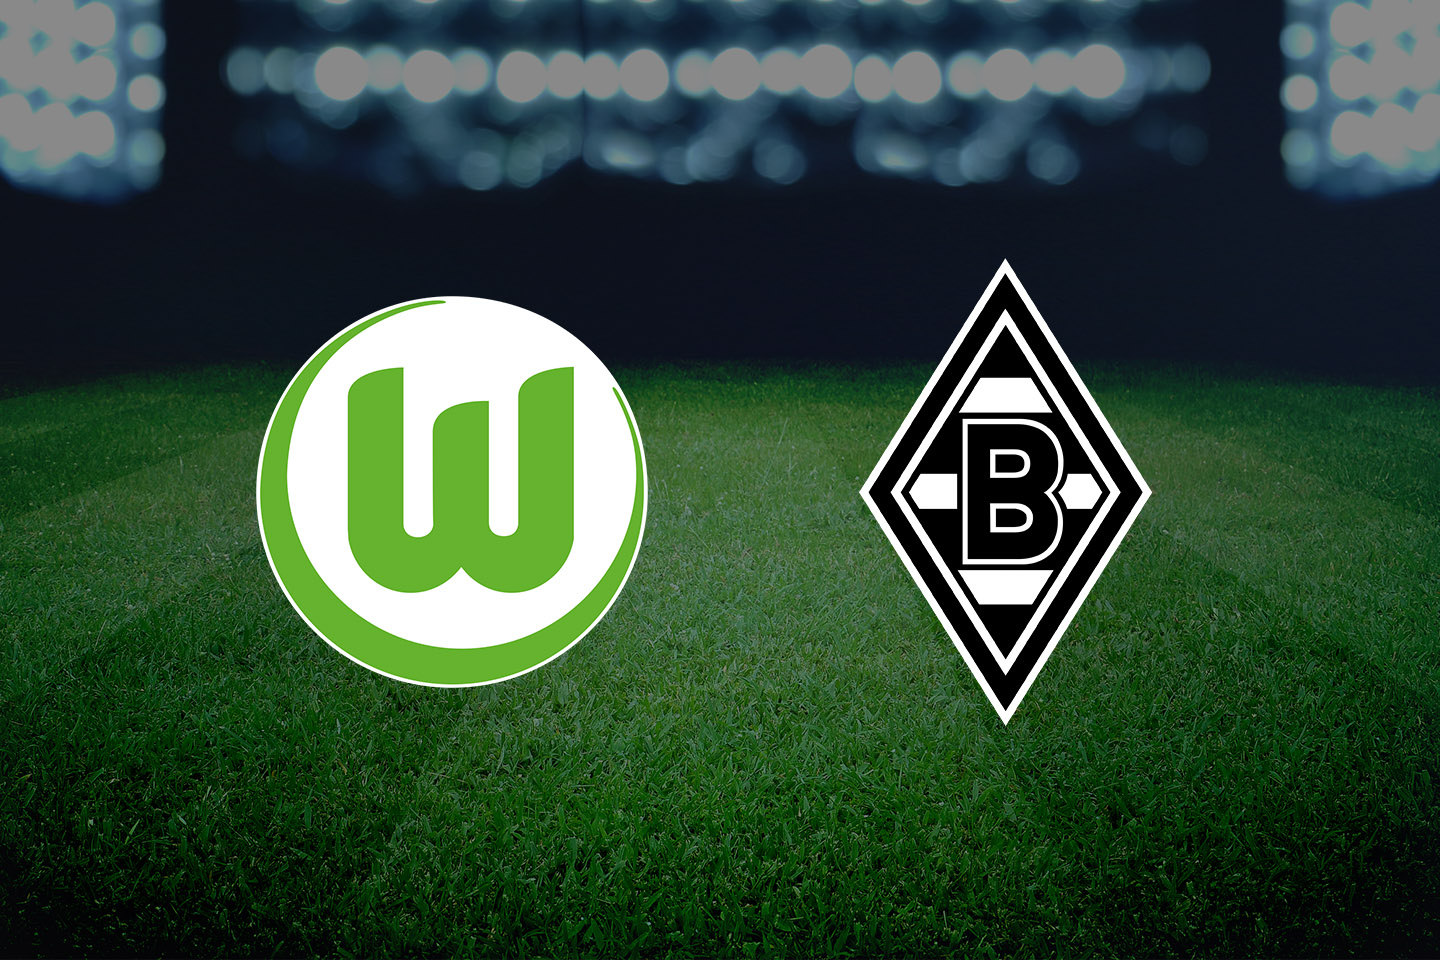 Wolfsburg – Borussia Monchengladbach